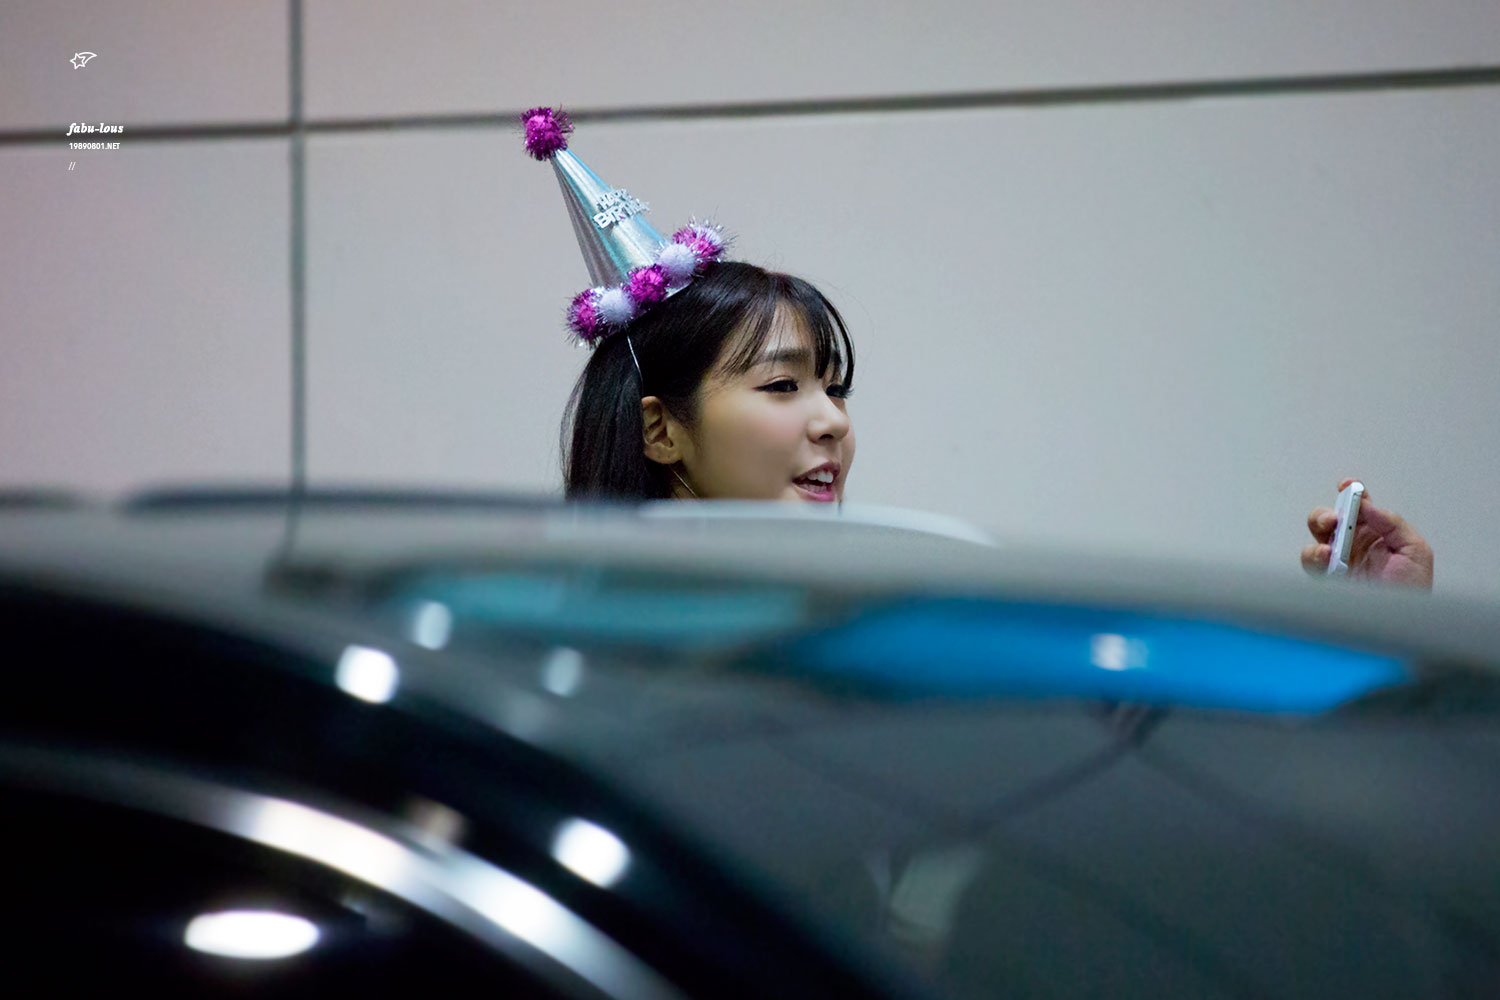 [PIC][01-08-2015]Tiffany tham dự "Tiffany's Birthday Party" tại SM COEX Artium vào hôm nay 20996063452_086676f8cb_o